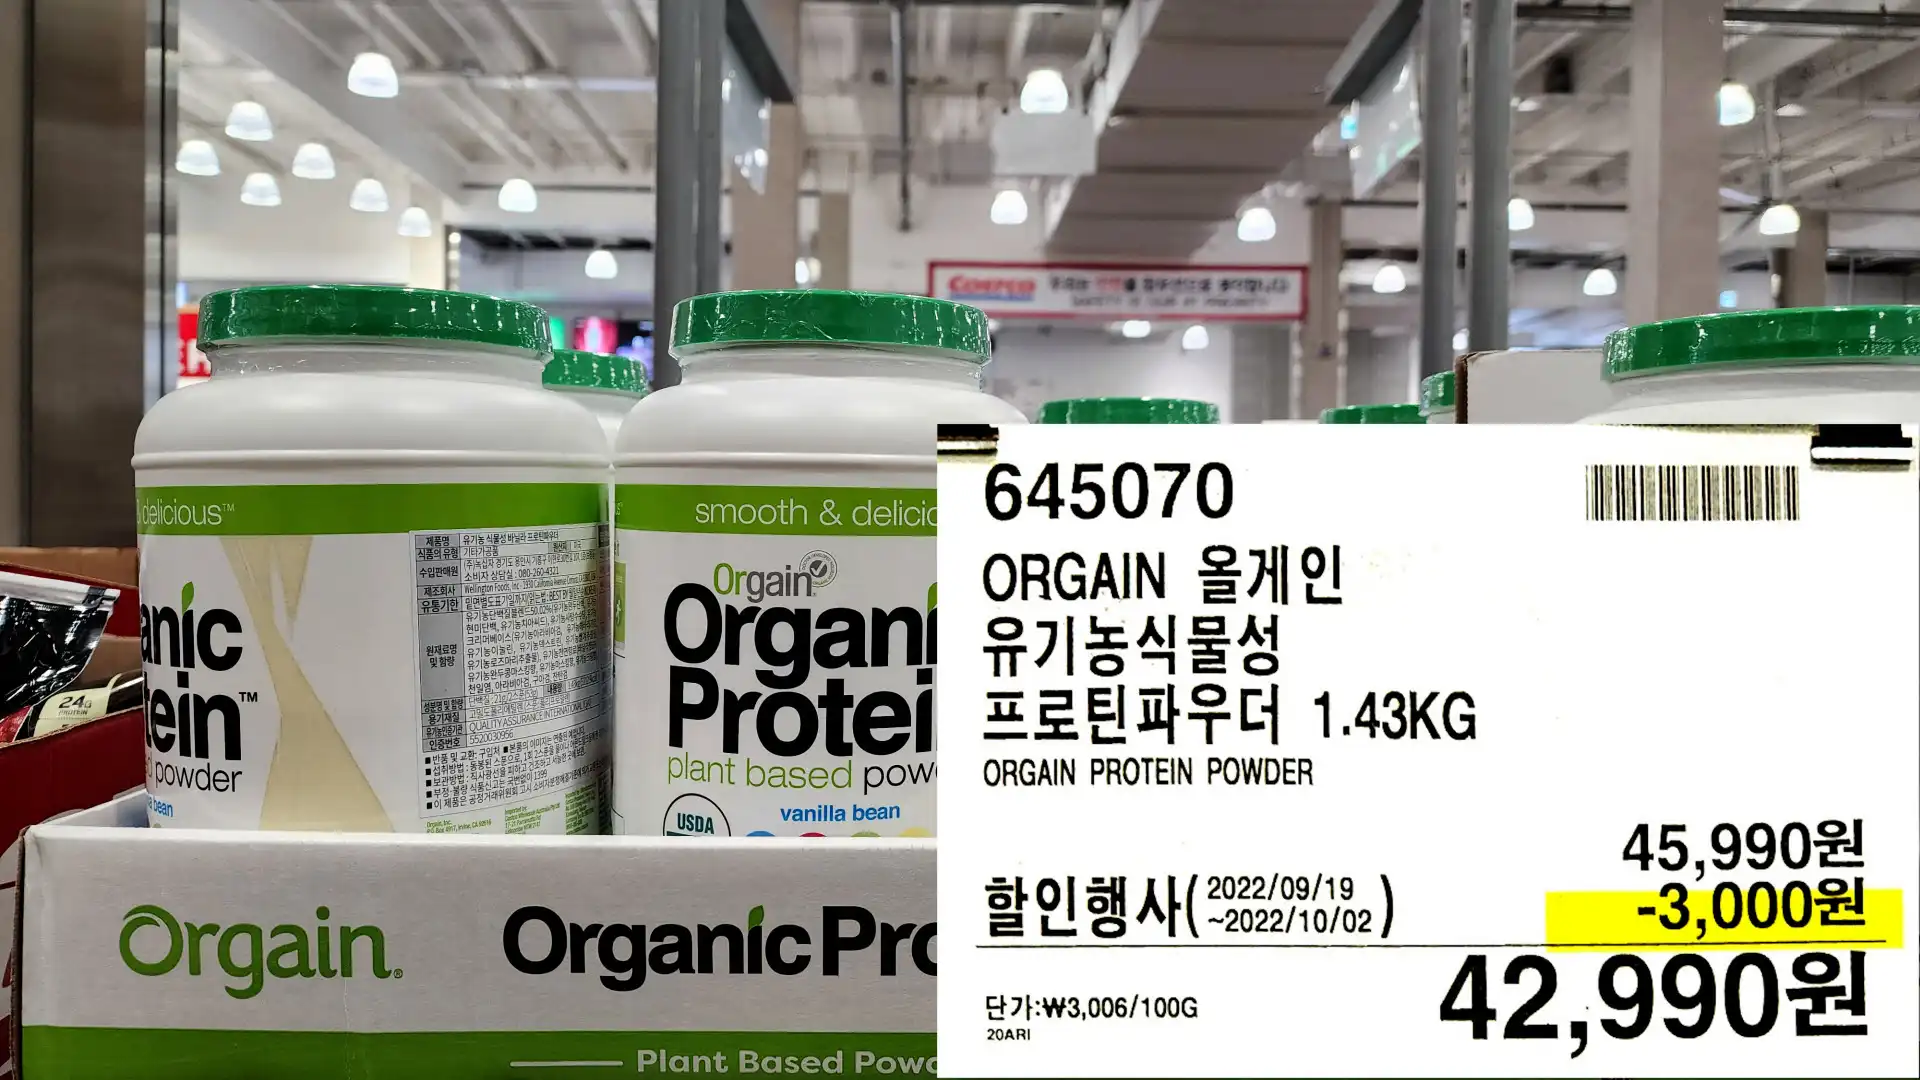 ORGAIN 올게인
유기농식물성
프로틴파우더 1.43KG
ORGAIN PROTEIN POWDER
42&#44;990원